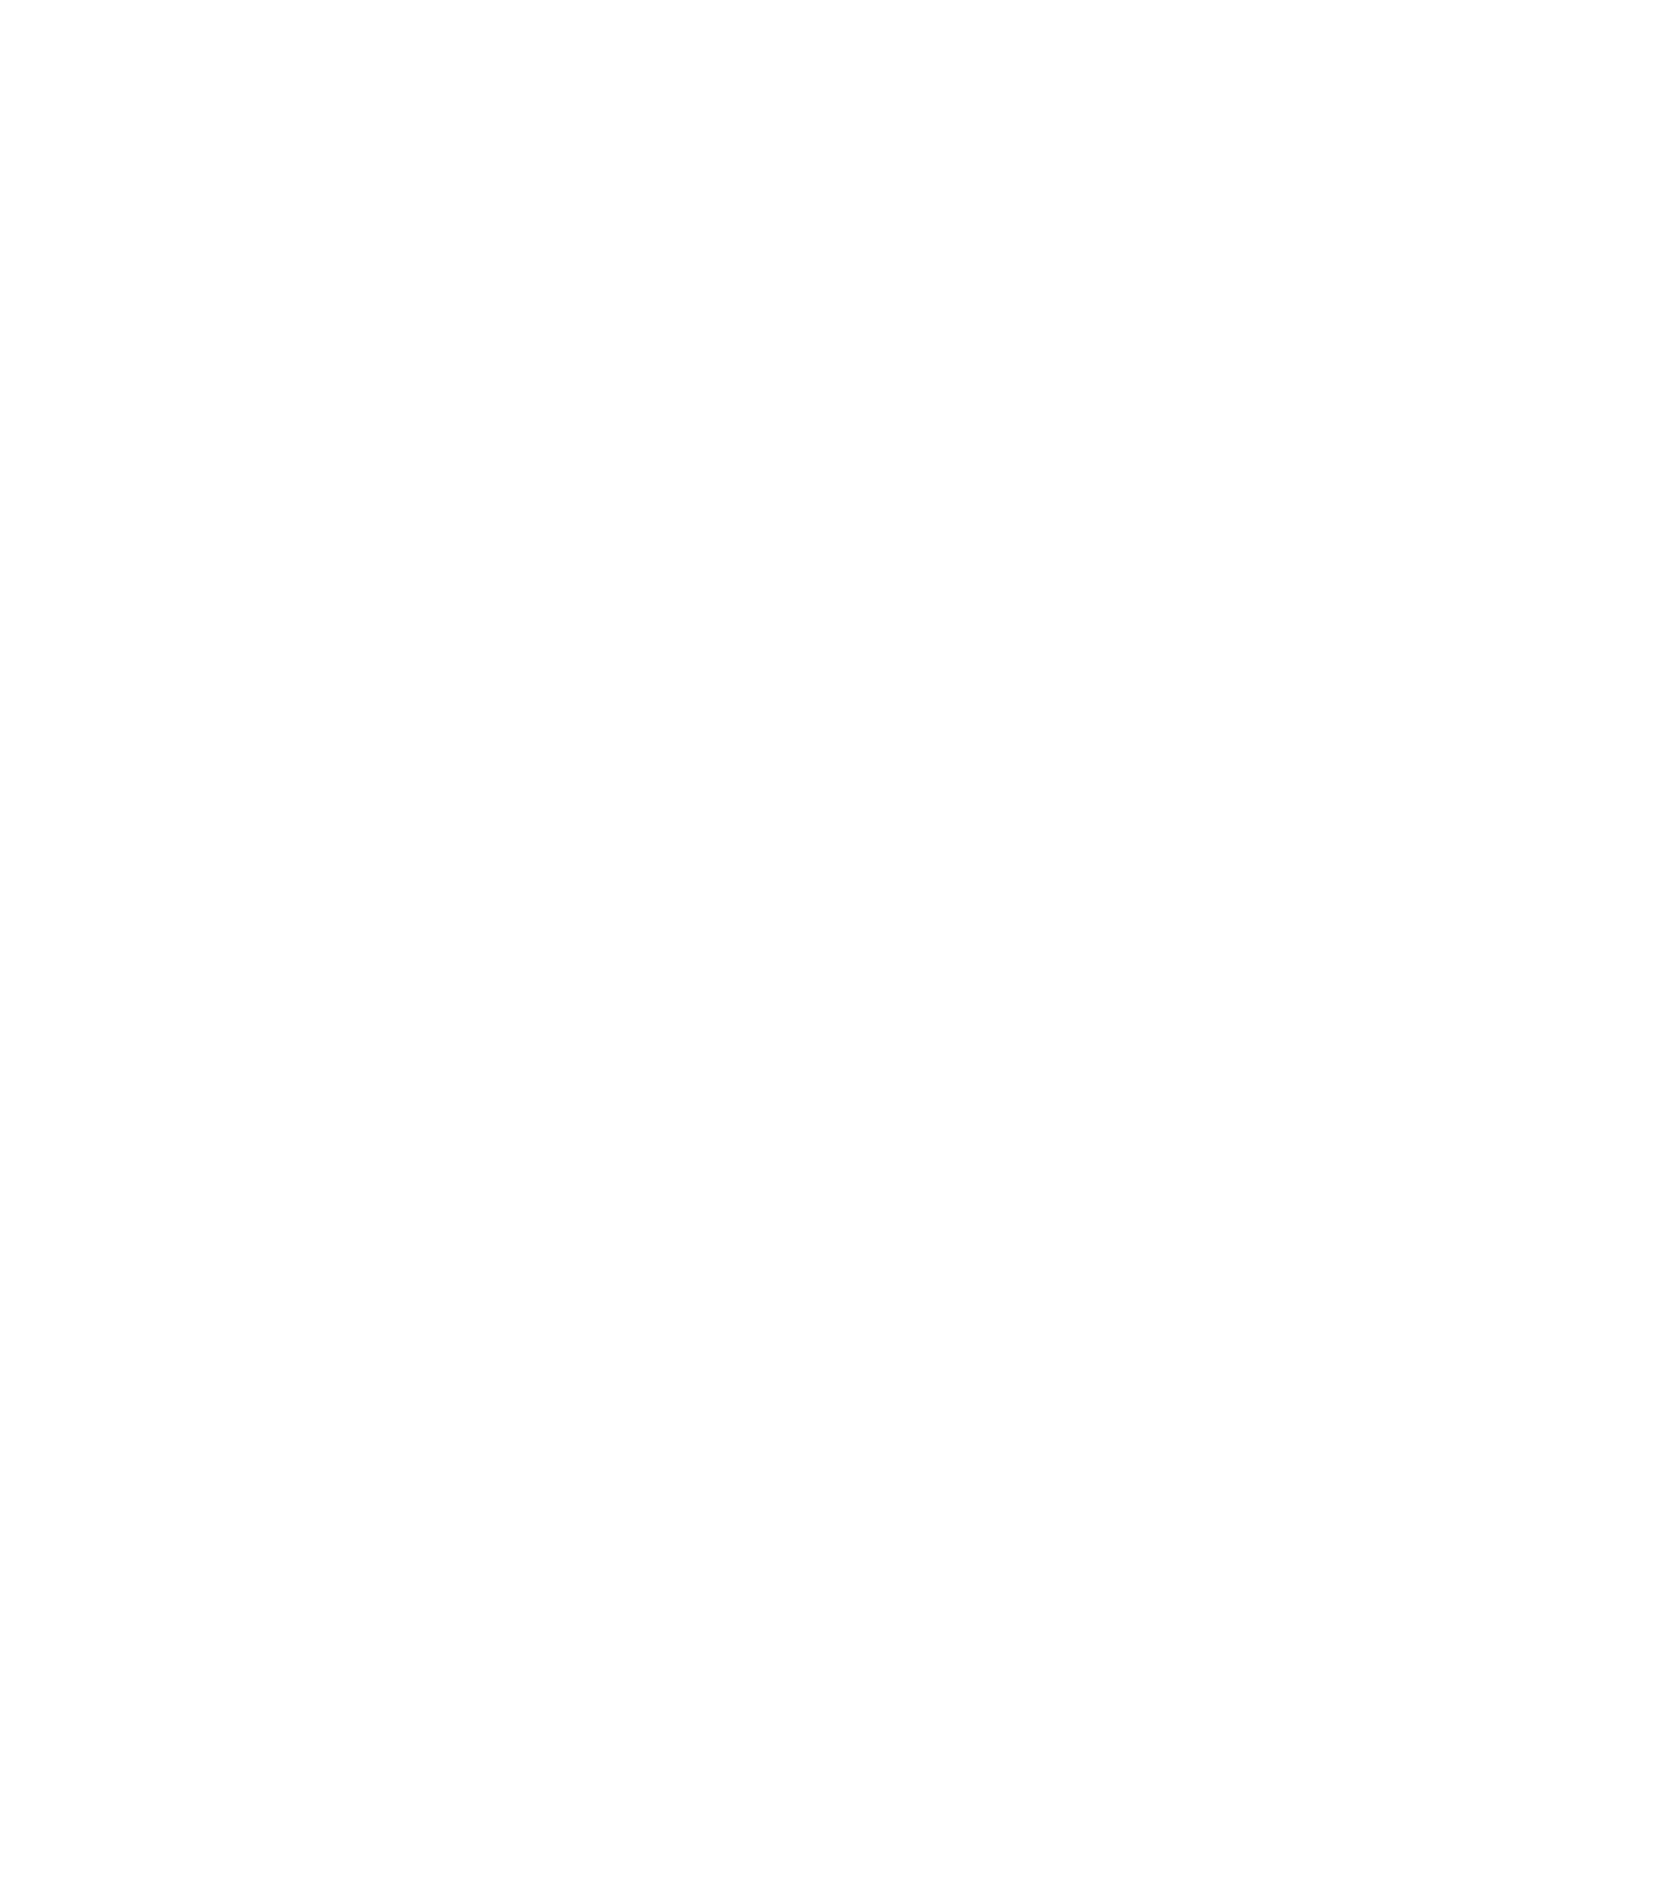 DE_Africa_Logo_Secondary_Monocrome_Reversed